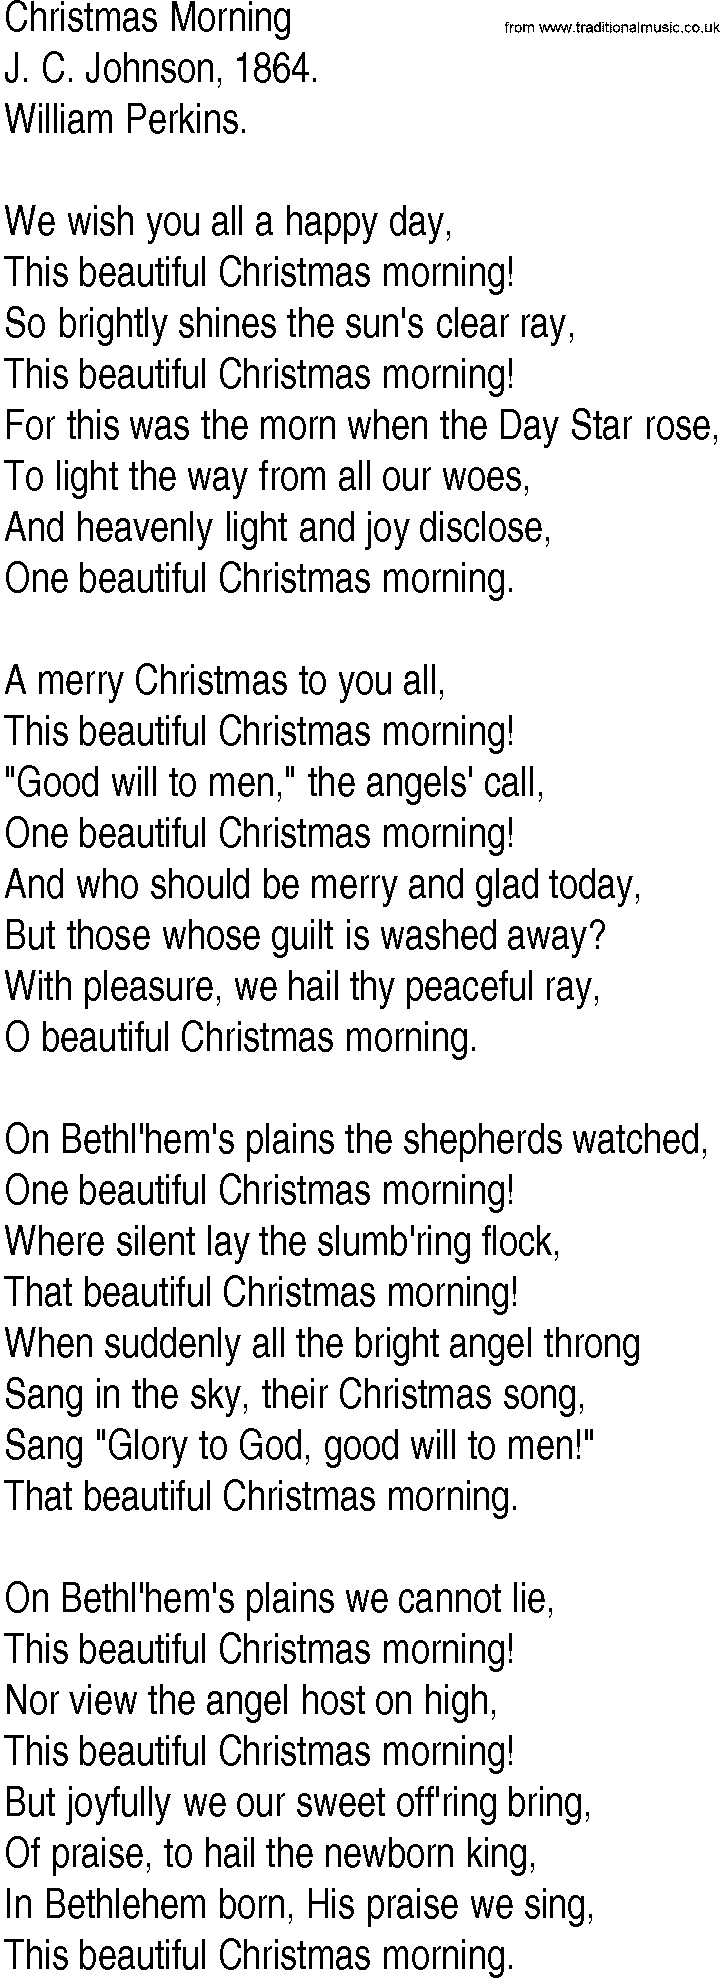 Hymn and Gospel Song: Christmas Morning by J C Johnson lyrics